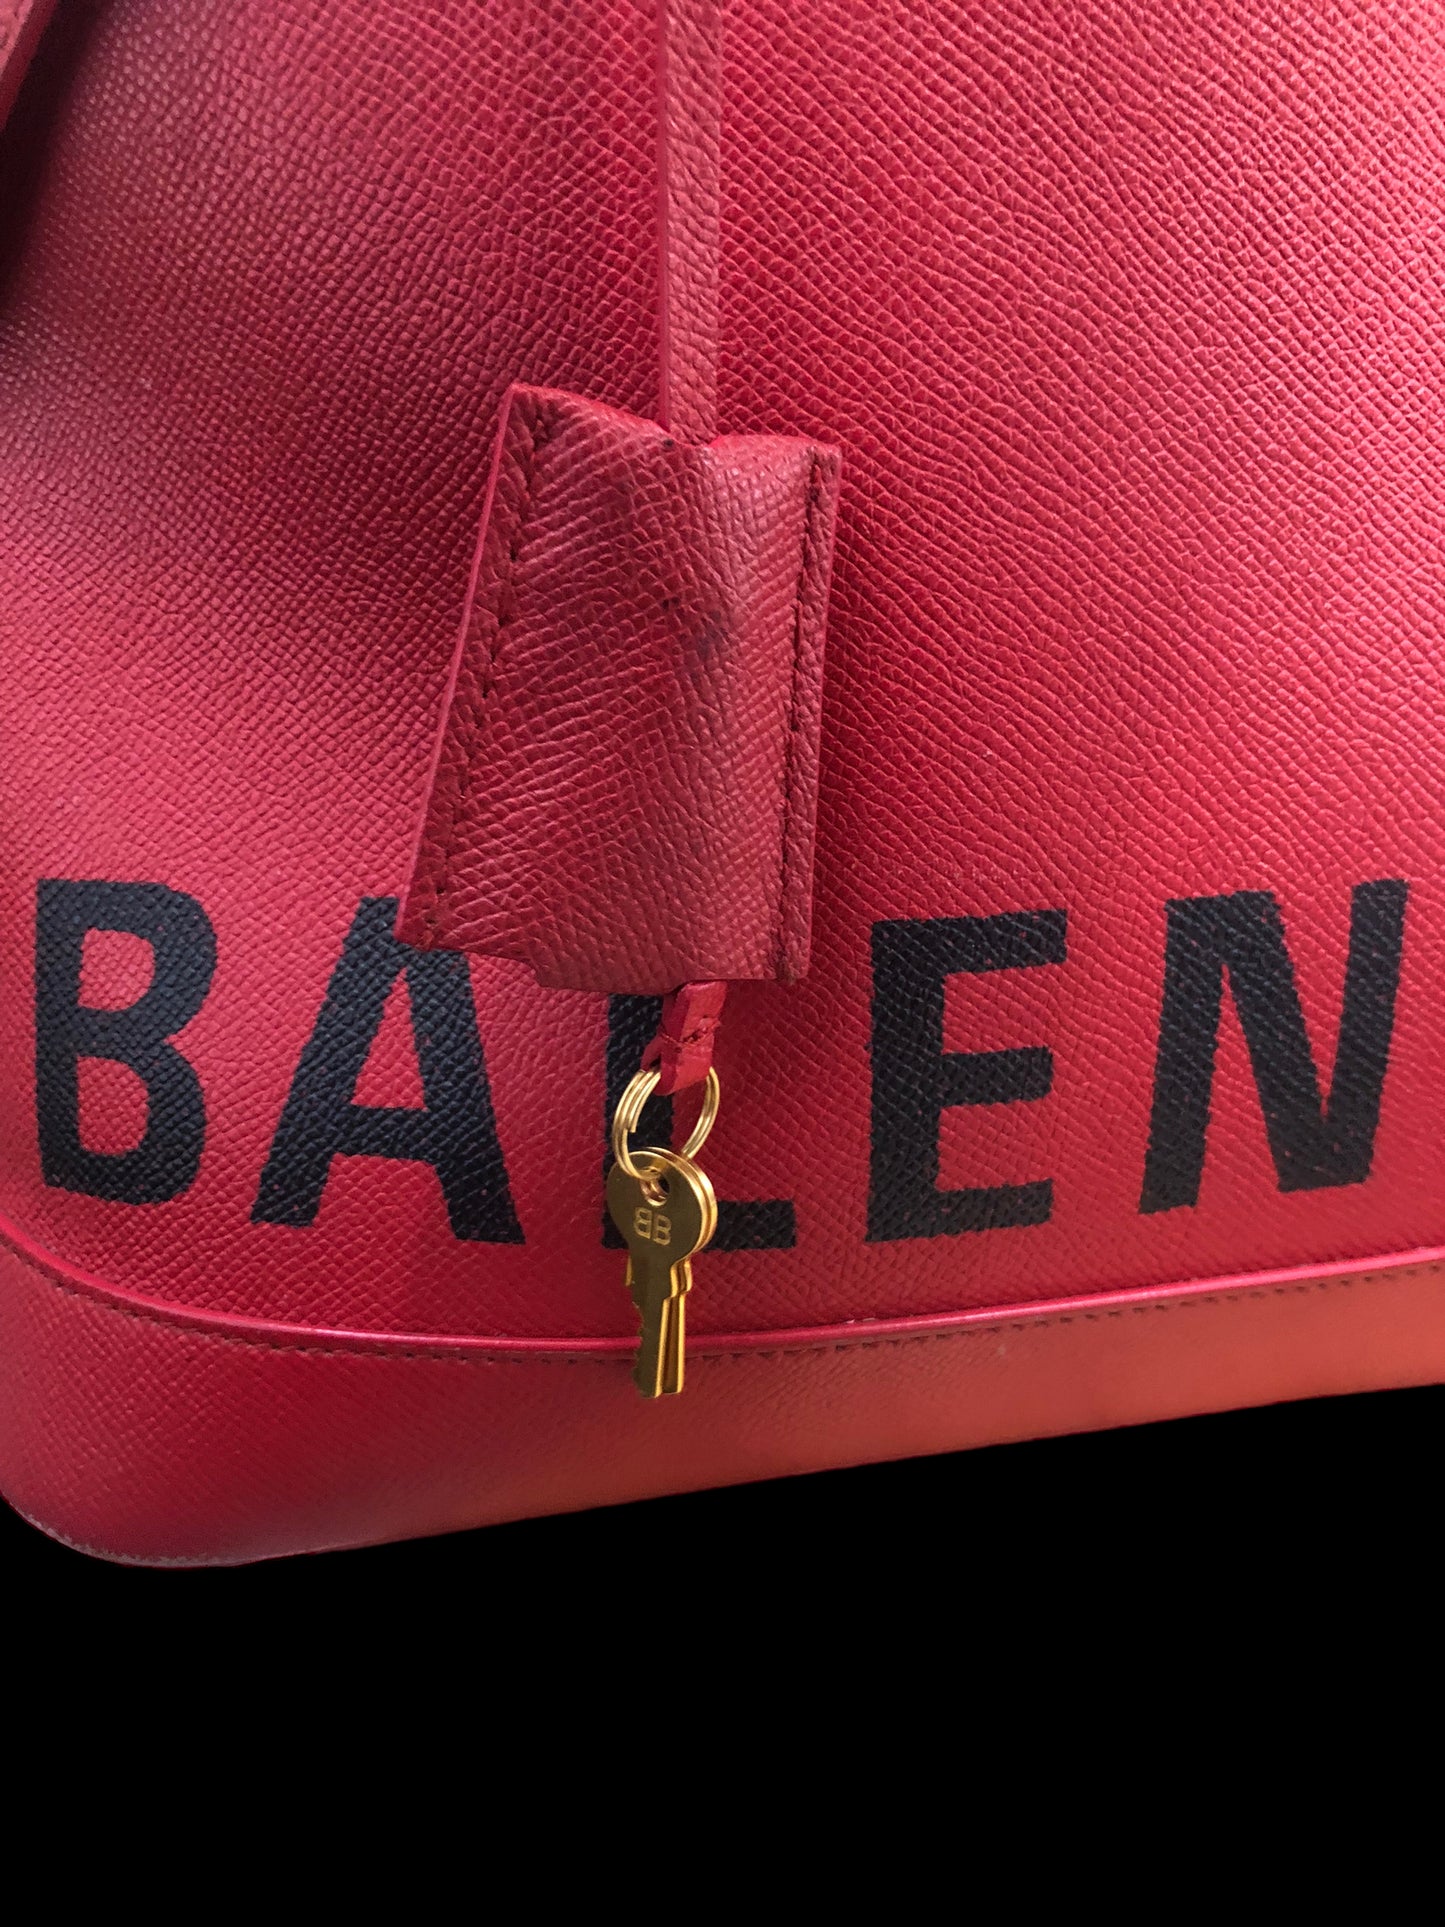 Authentic Balenciaga Red Ville Top Handle Crossbody Bag